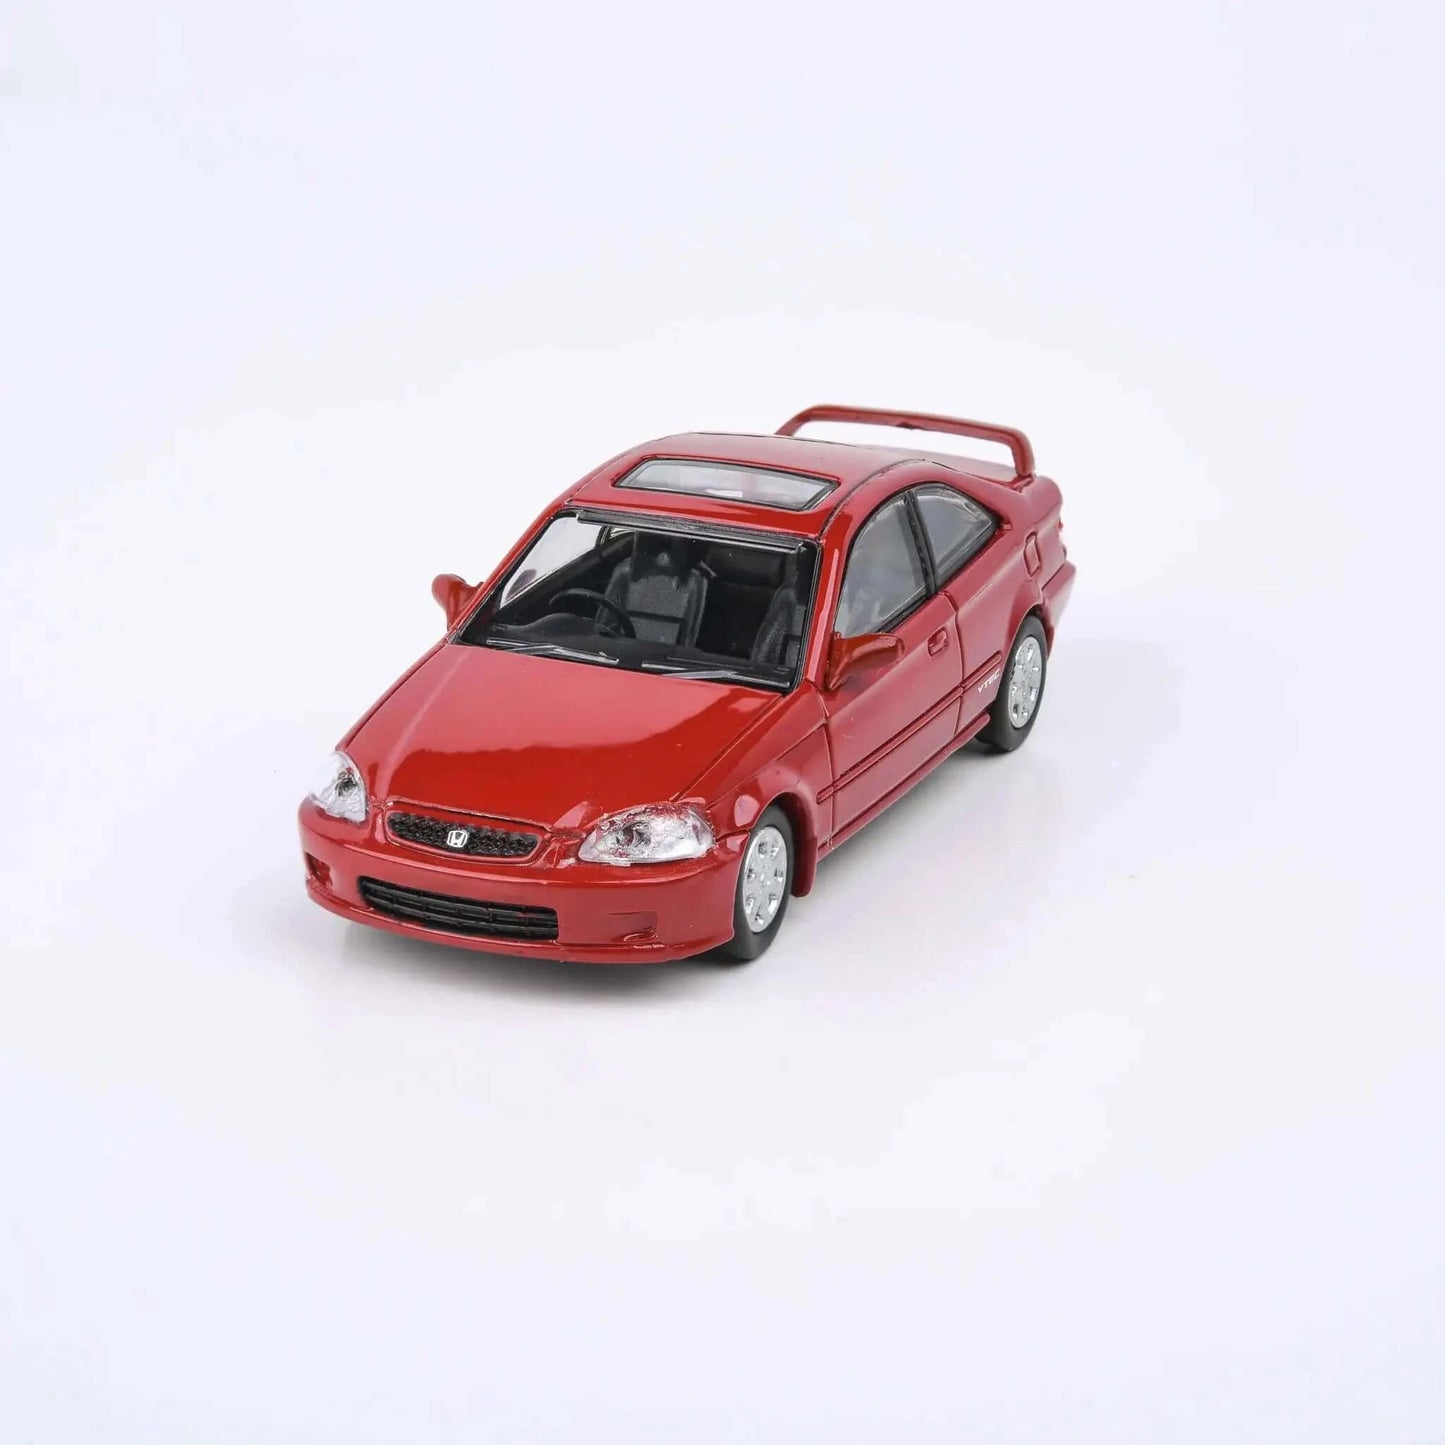 Honda civic Si EM1 1999 red LHD Para64 1/64 | Motors Miniatures